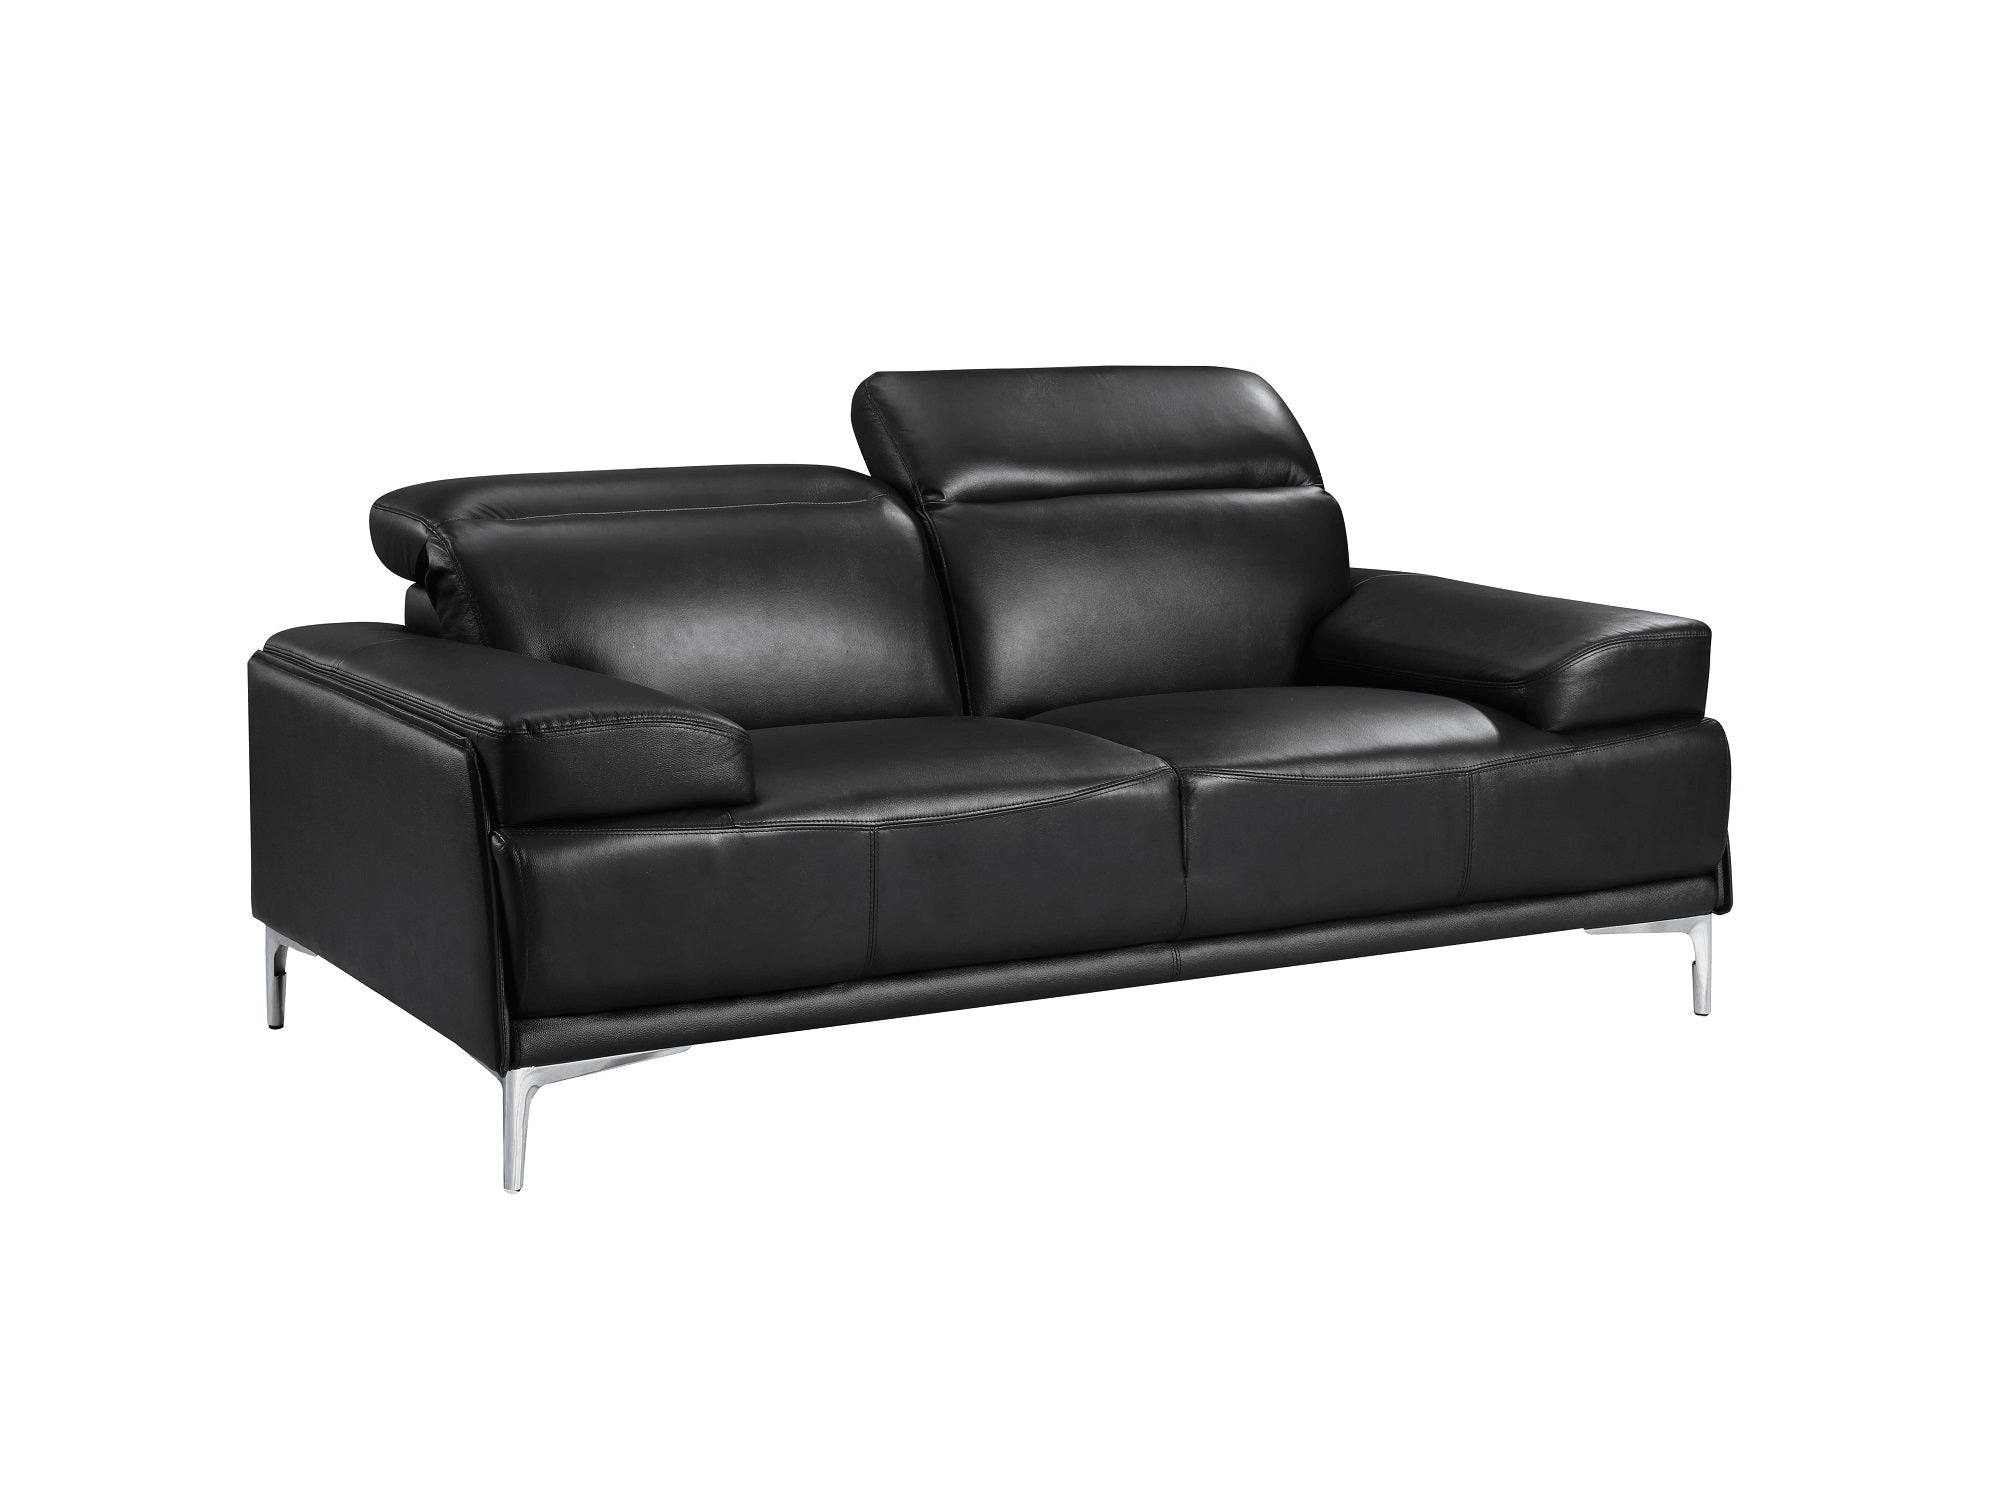 Archlight Black Sofa - Euro Living Furniture